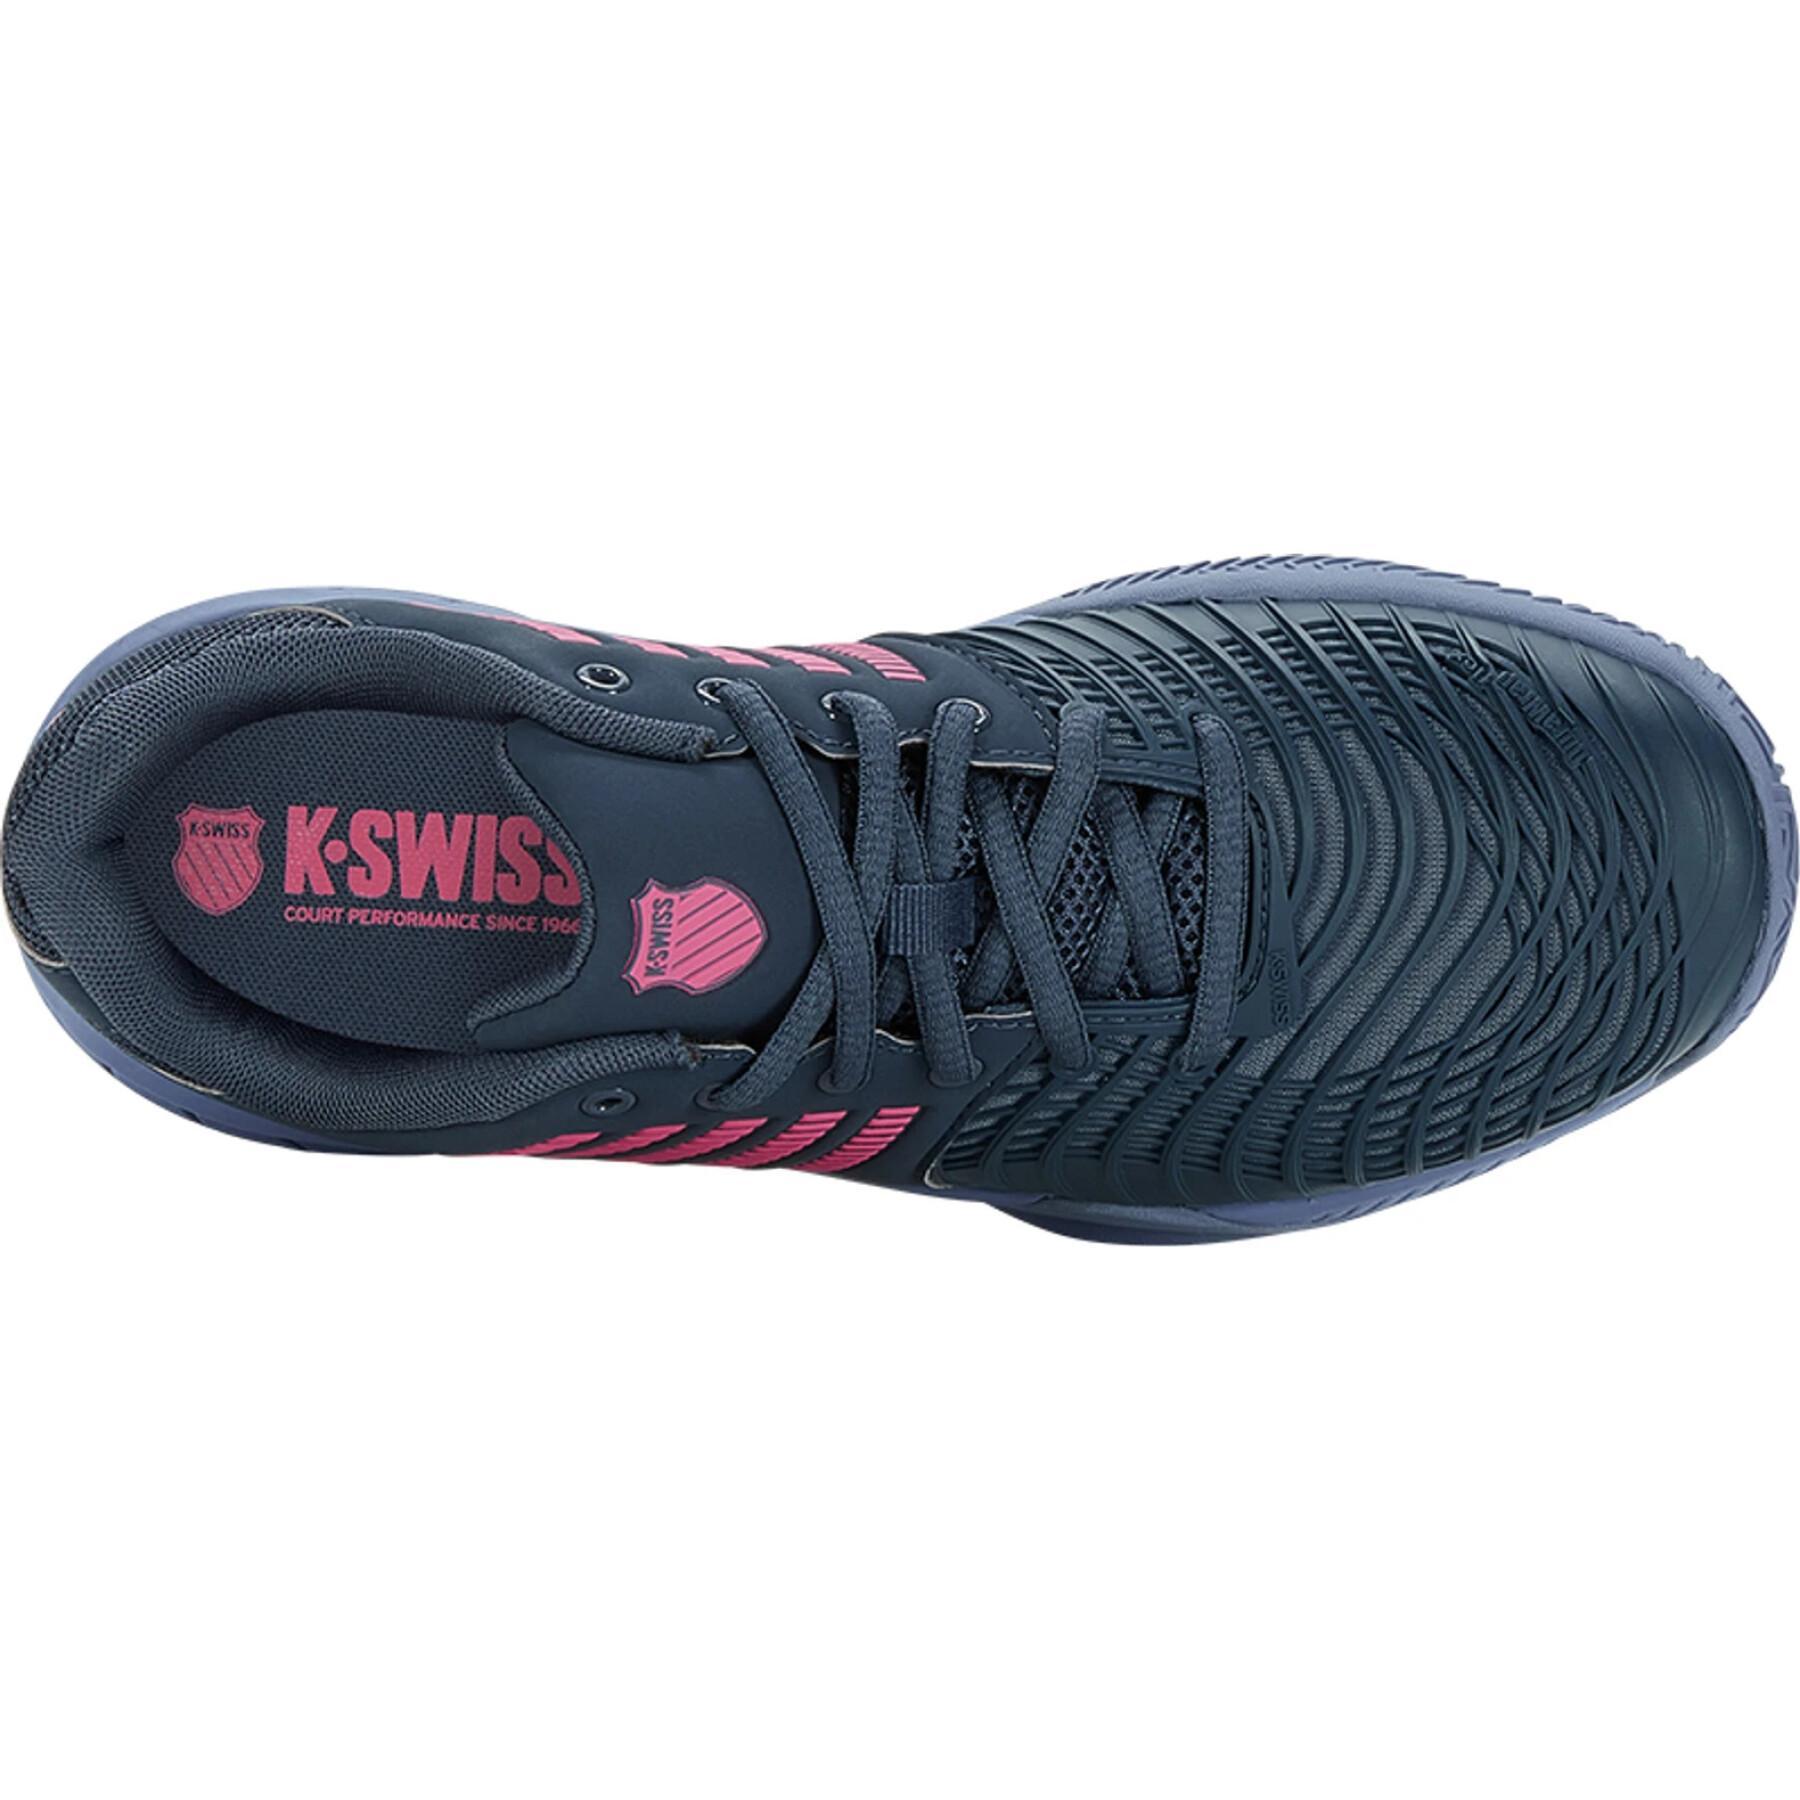 Women's sneakers K-Swiss Express Light 3 Hb